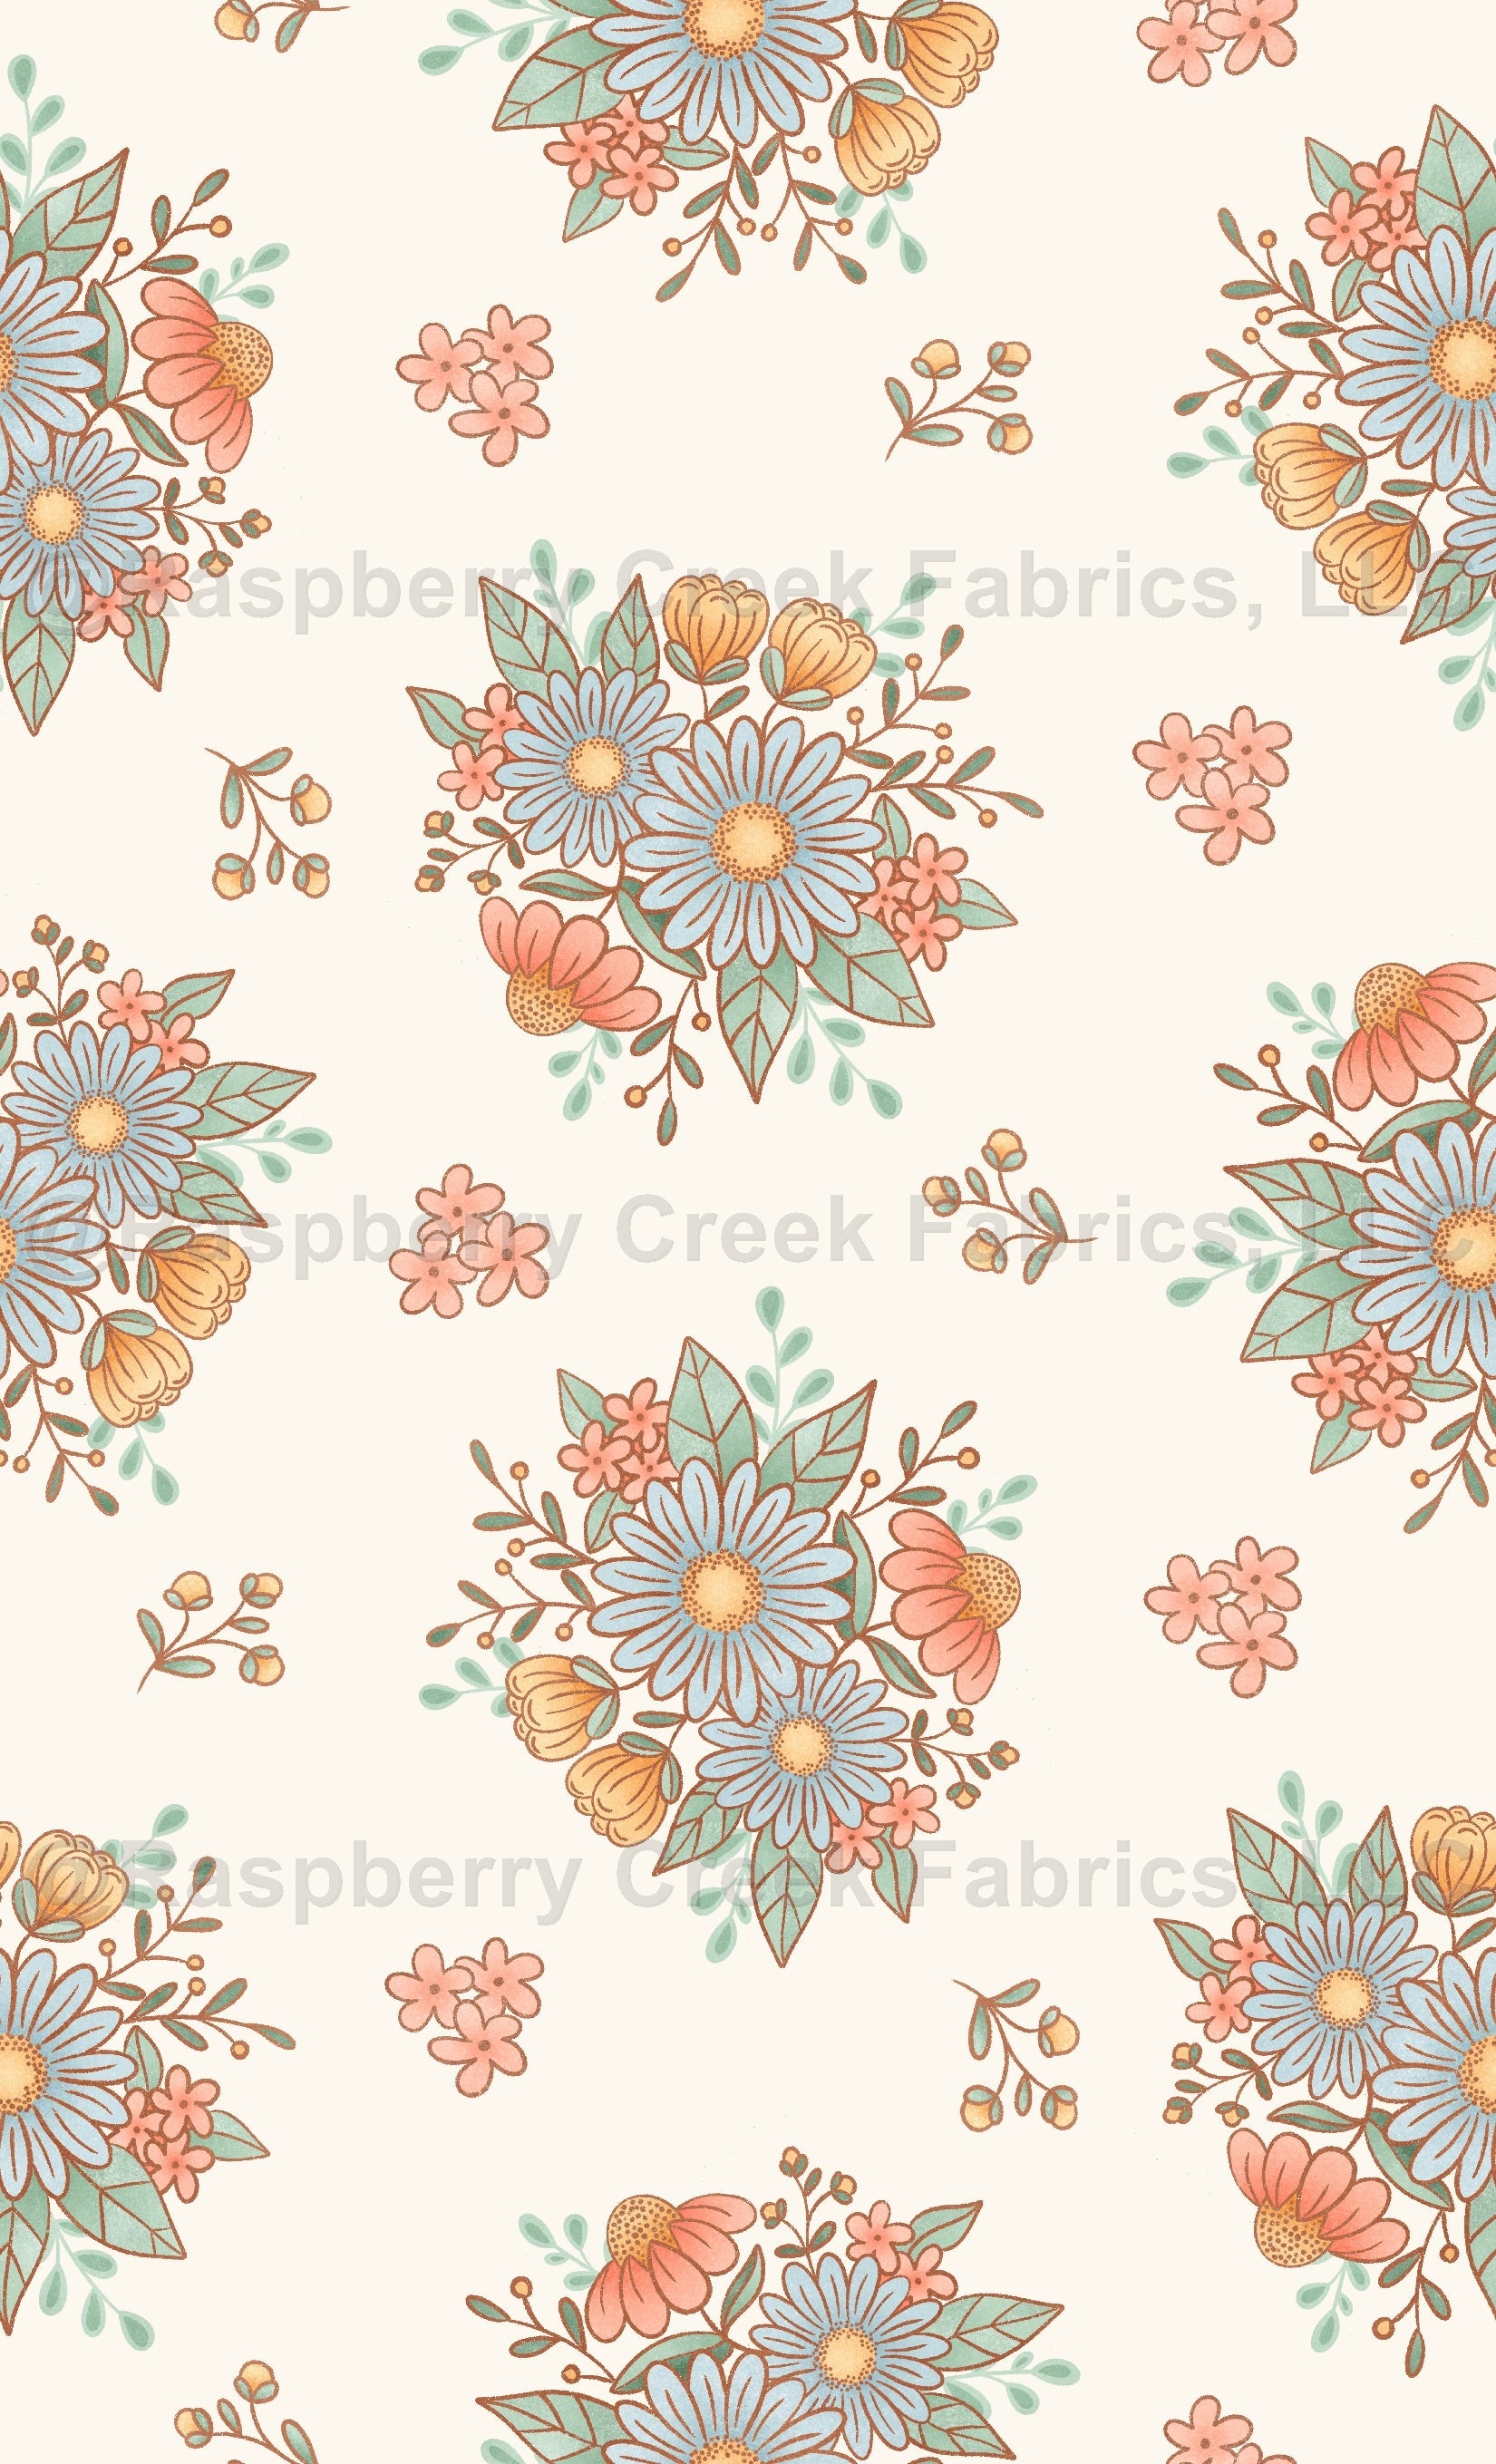 Cottontail Bouquet Fabric, Raspberry Creek Fabrics, watermarked